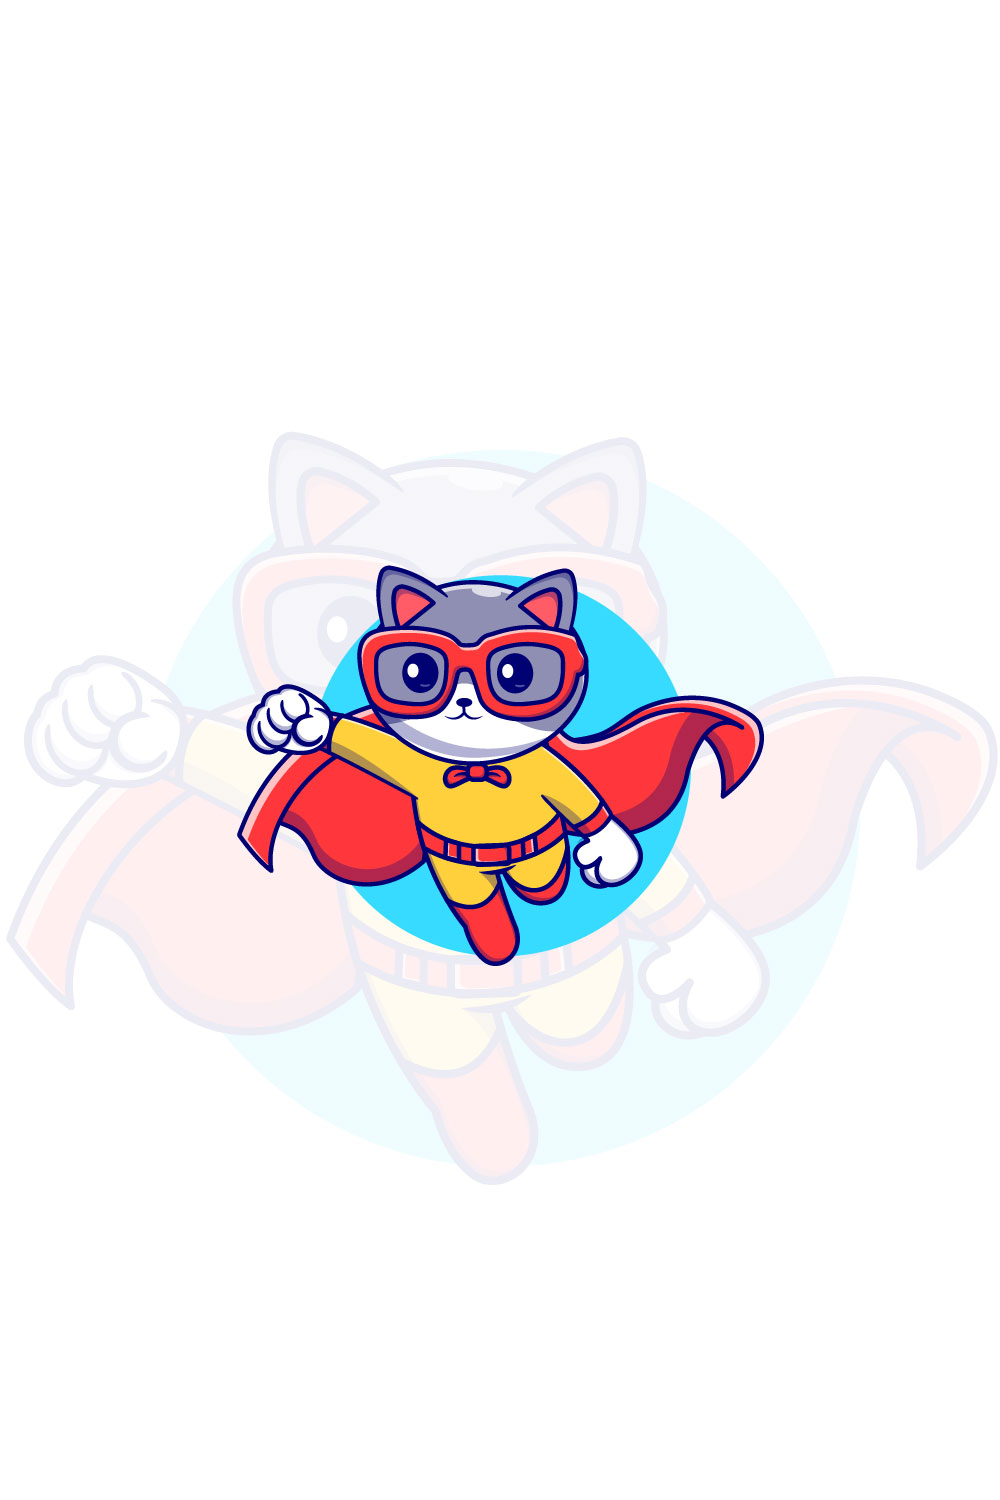 Cute Cat Super Hero Cartoon Vector Icon Graphic Design illustration pinterest preview image.